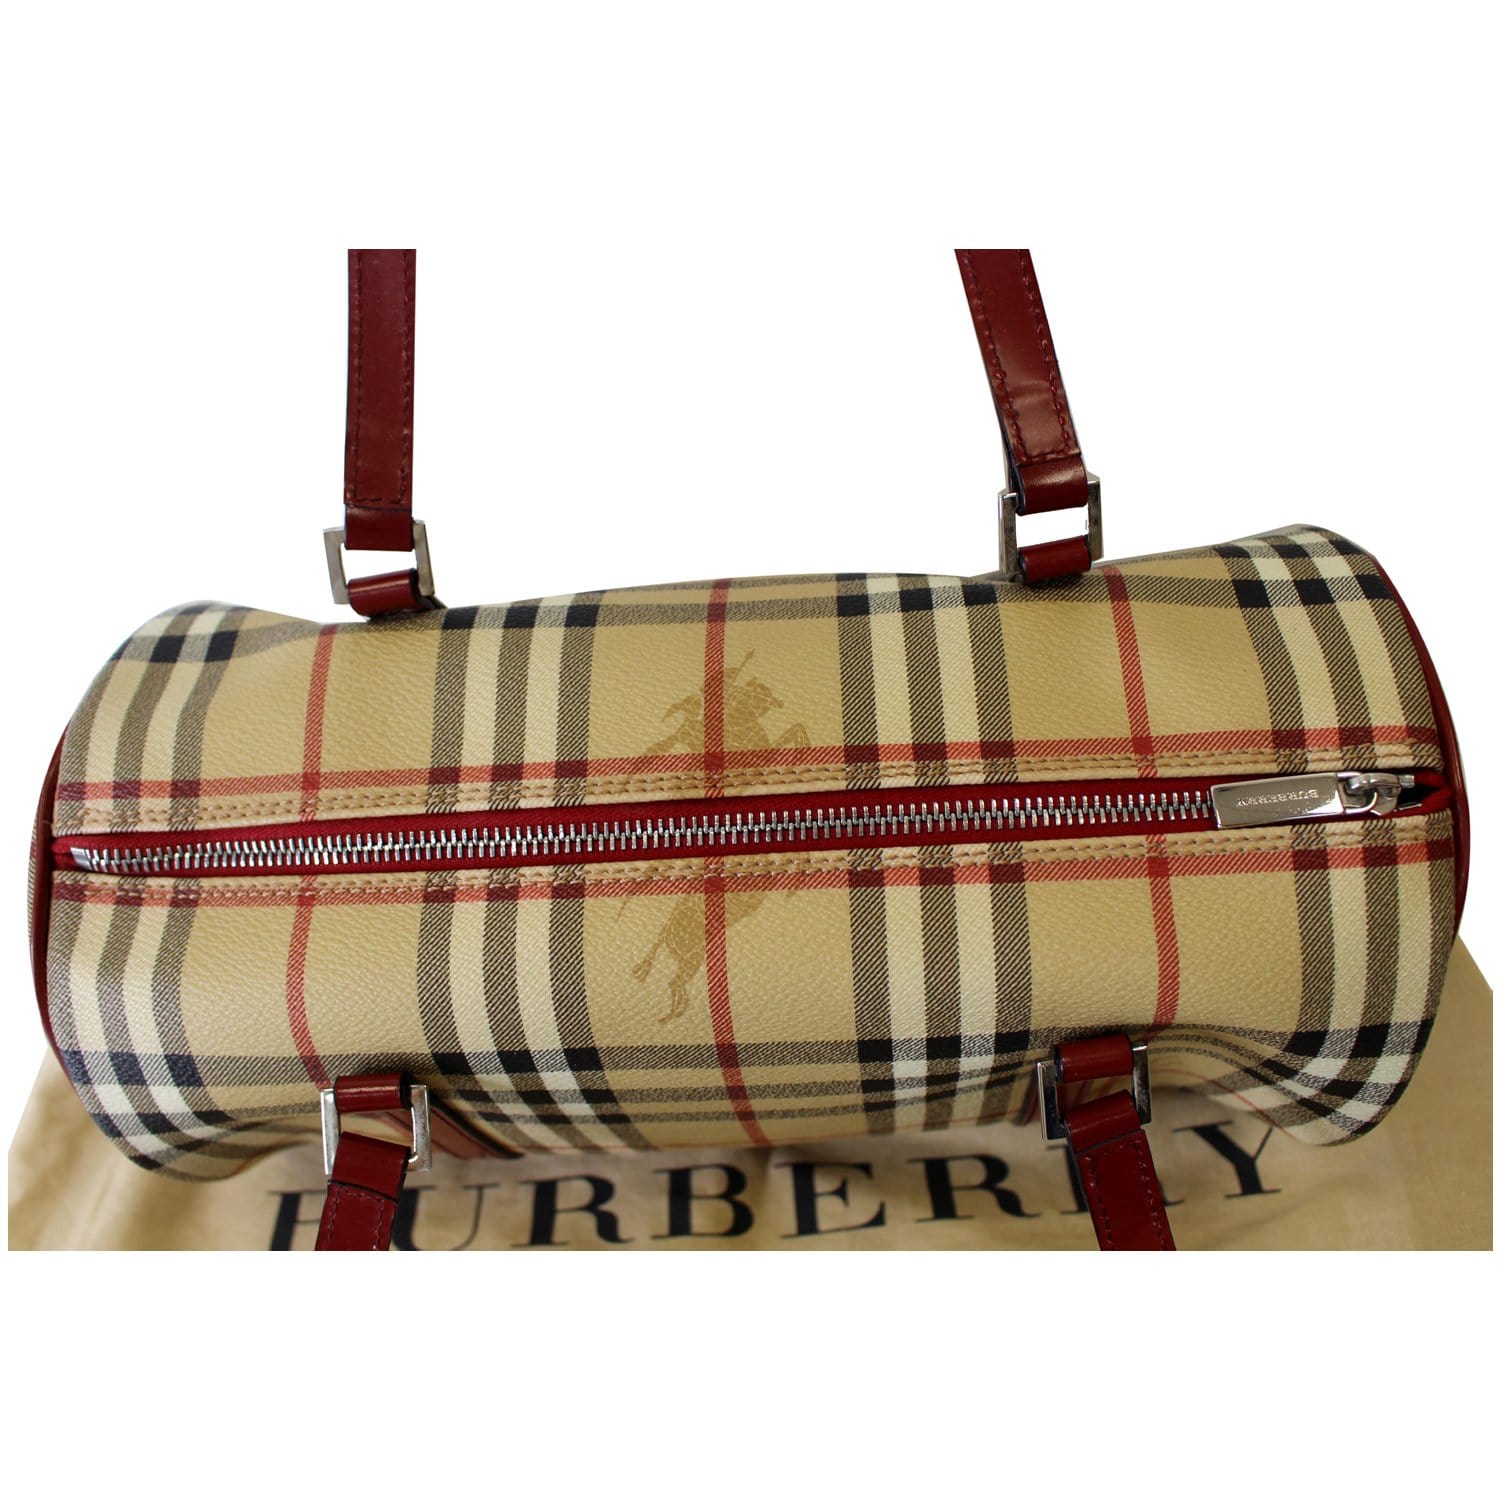 100% authentic Burberry Haymarket Papillon handbag